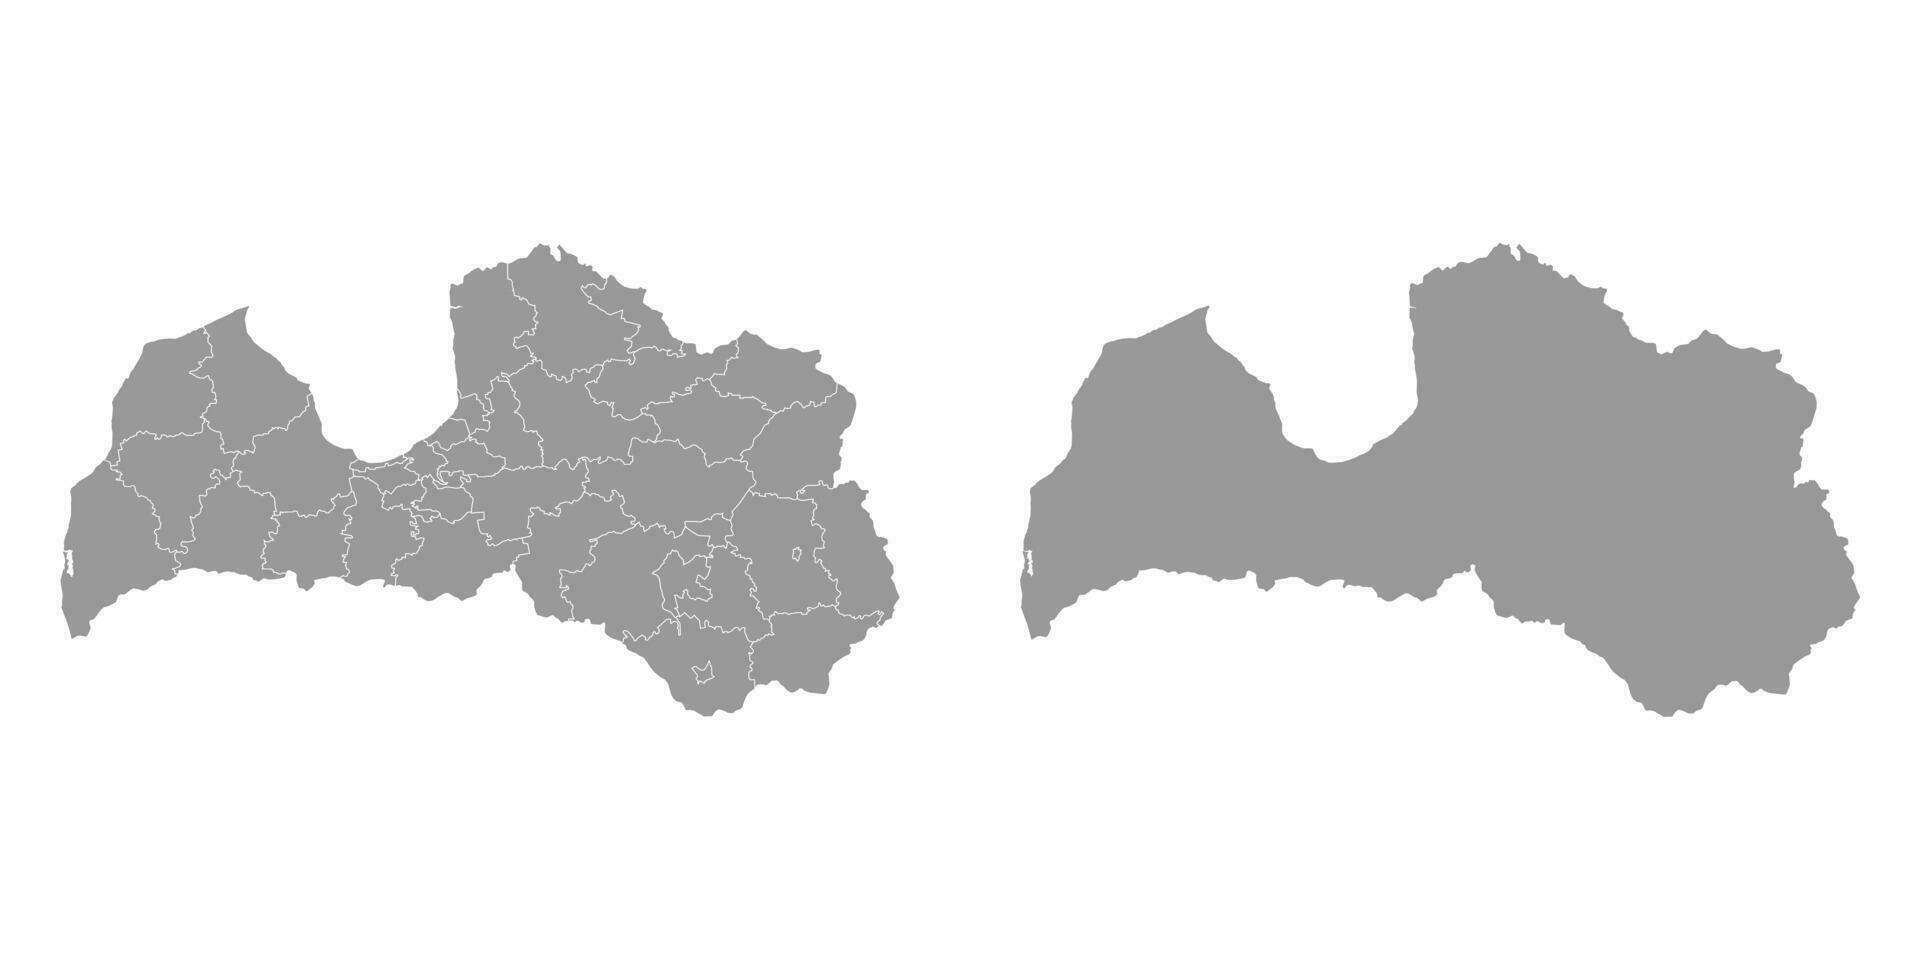 Lettland grau Karte mit administrative Aufteilung. Vektor Illustration.